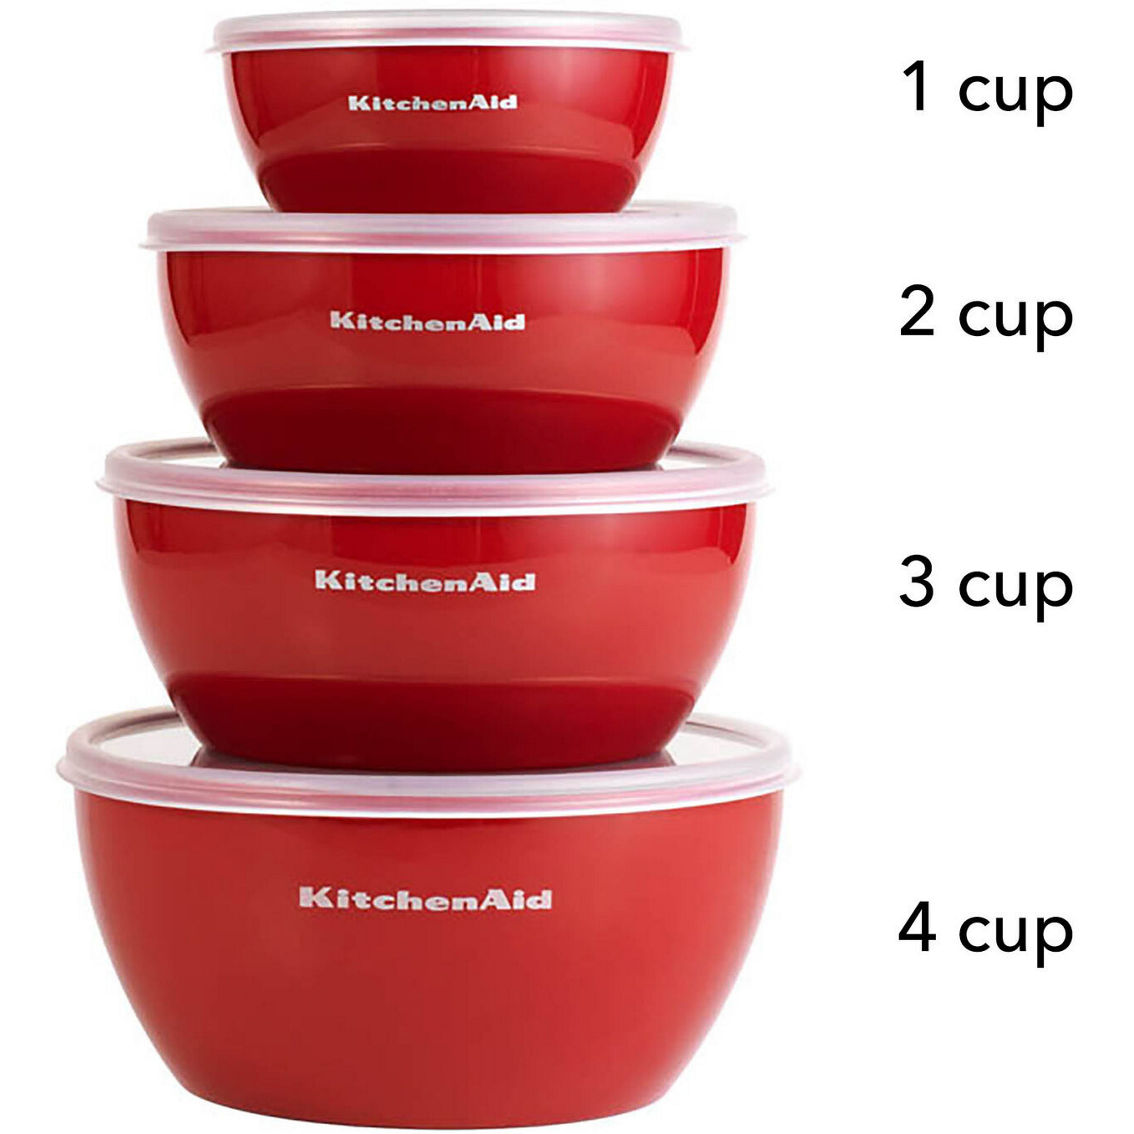 KitchenAid Classic Prep Bowls 4 pc. Set with Lids - Image 4 of 4